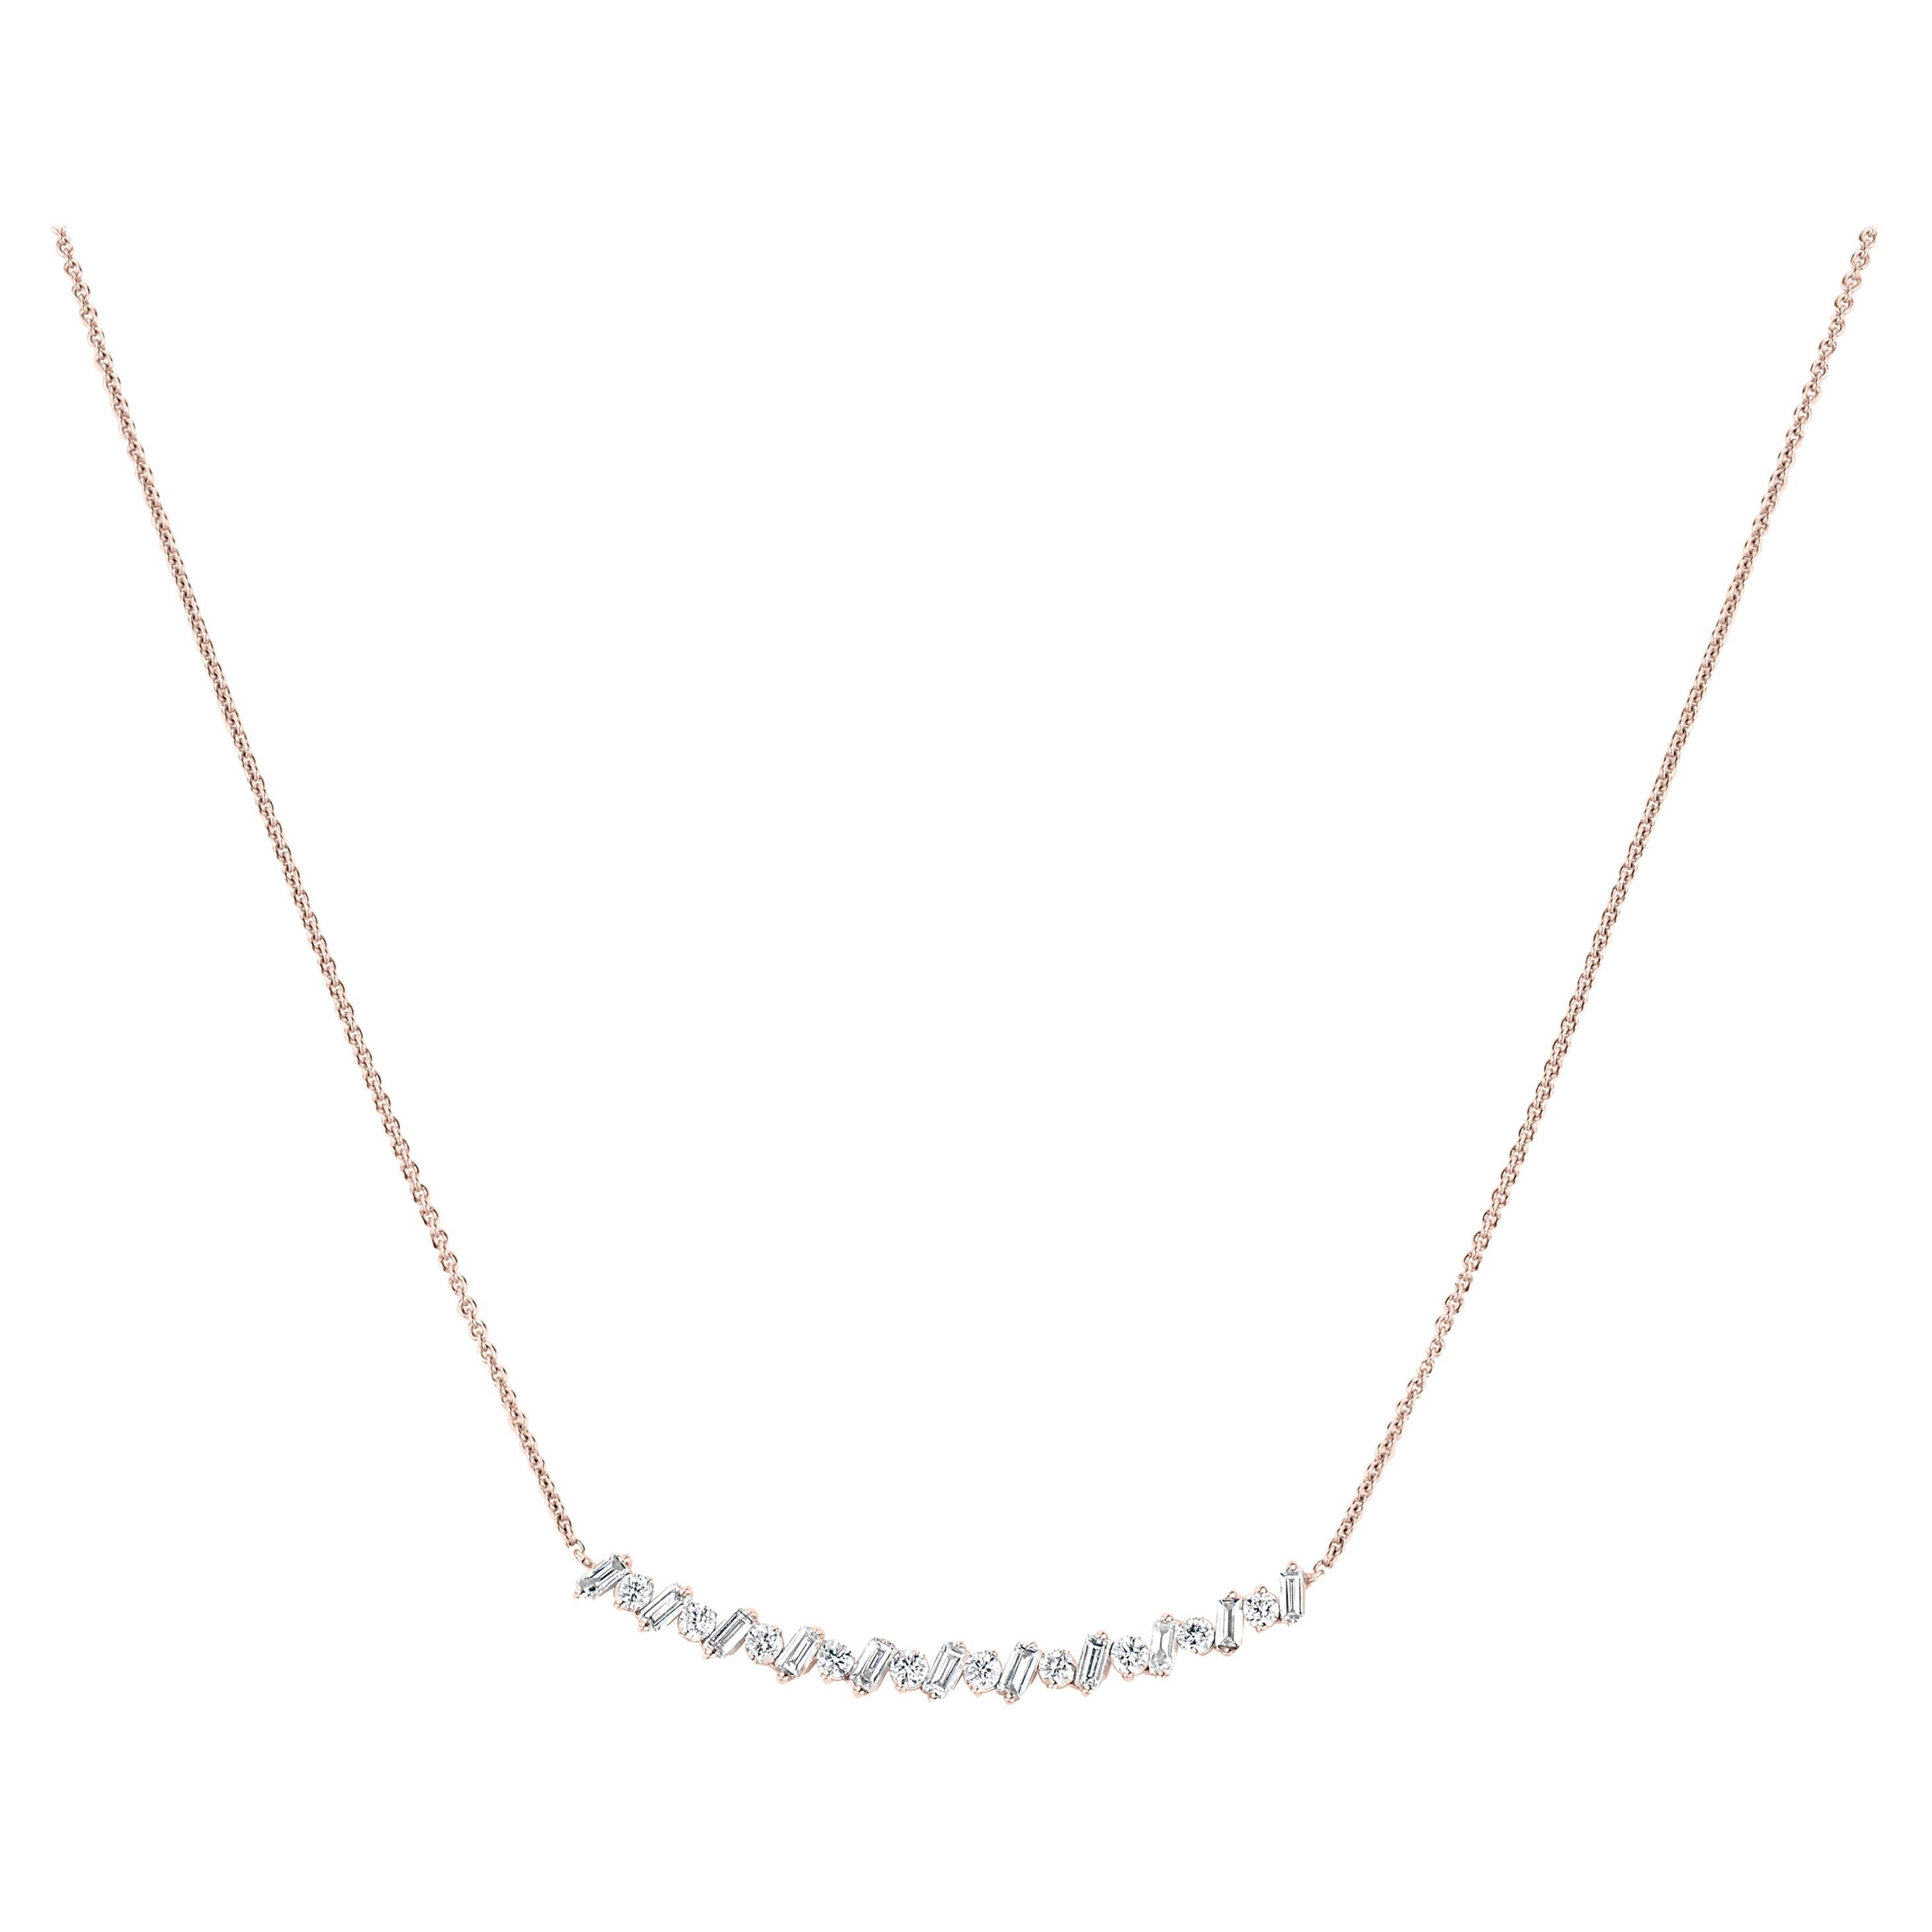 Luxle 0.47 Carat T.W Diamond Curve Pendant Necklace in 14k Rose Gold For Sale